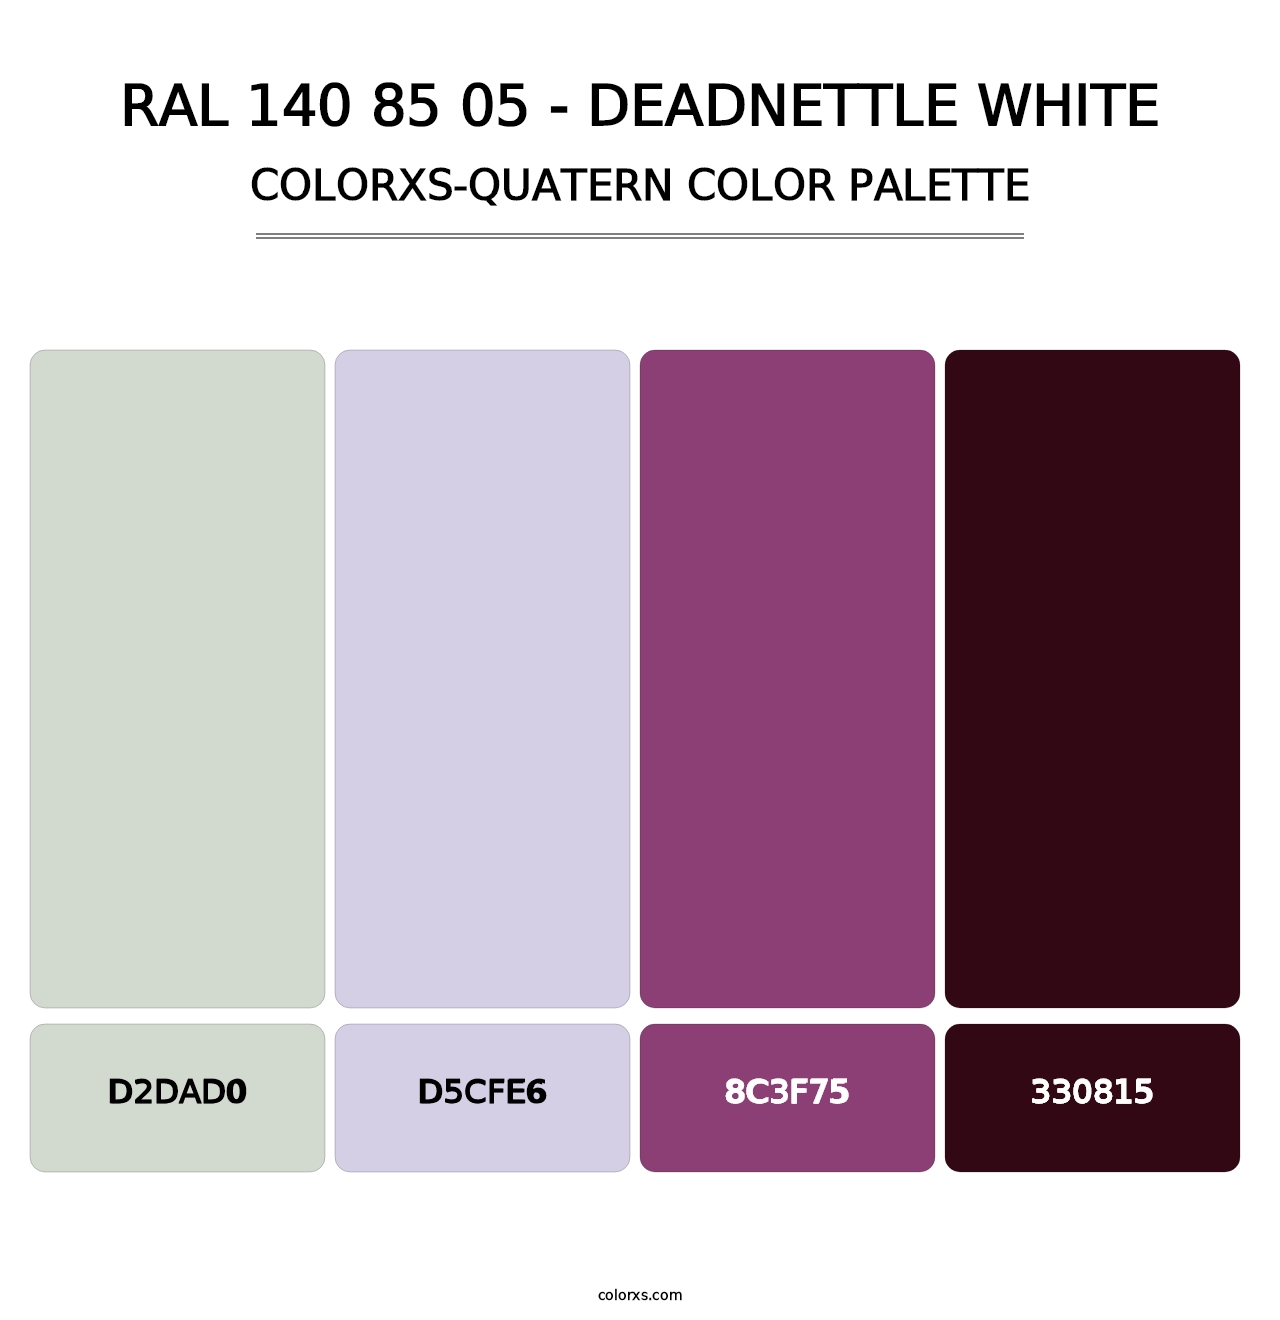 RAL 140 85 05 - Deadnettle White - Colorxs Quatern Palette